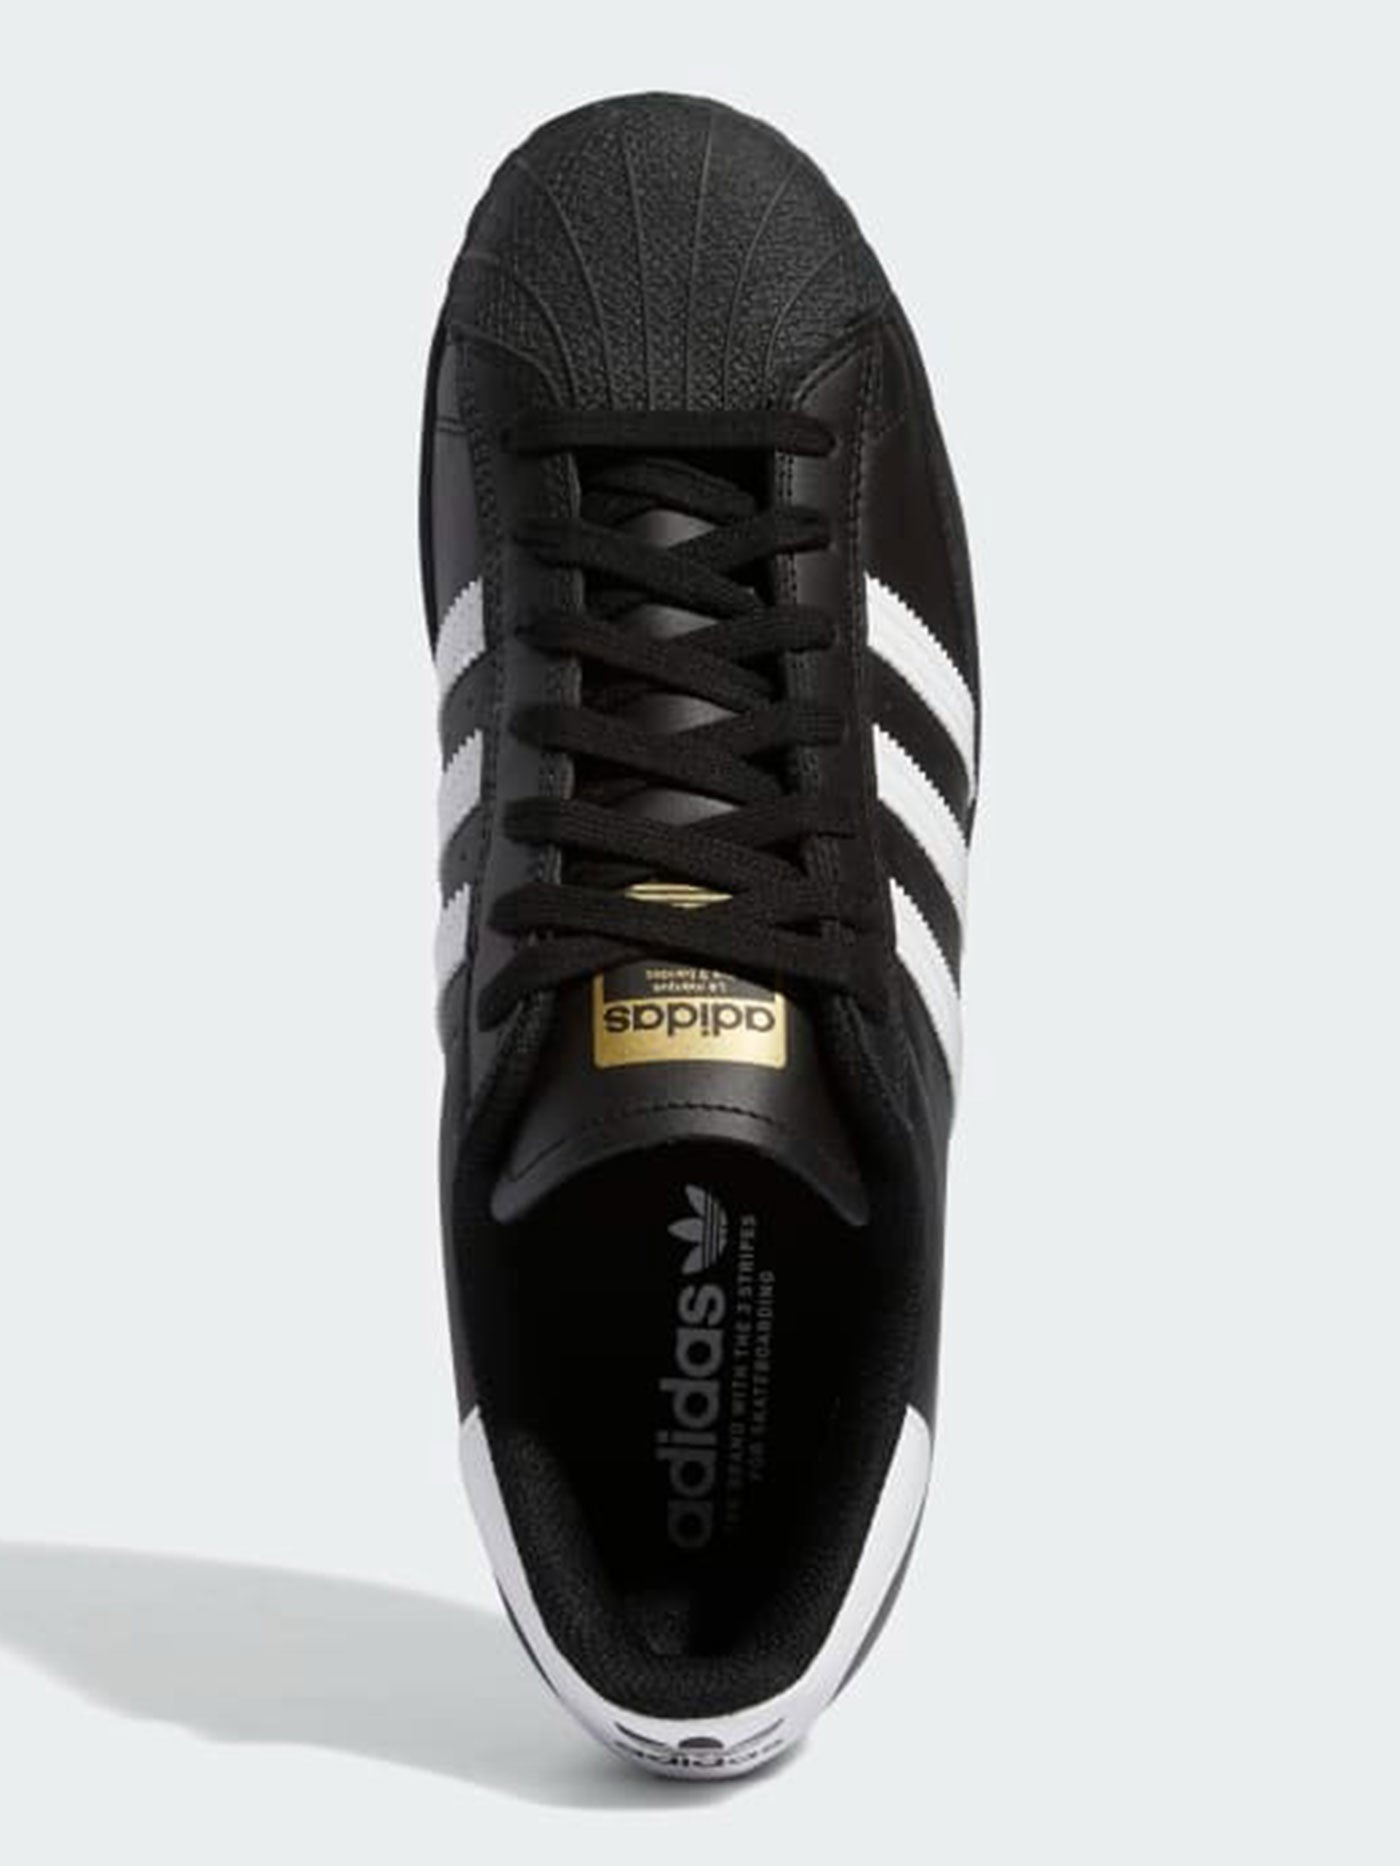 Adidas Superstar ADV Core Black/White/White Shoes 2024